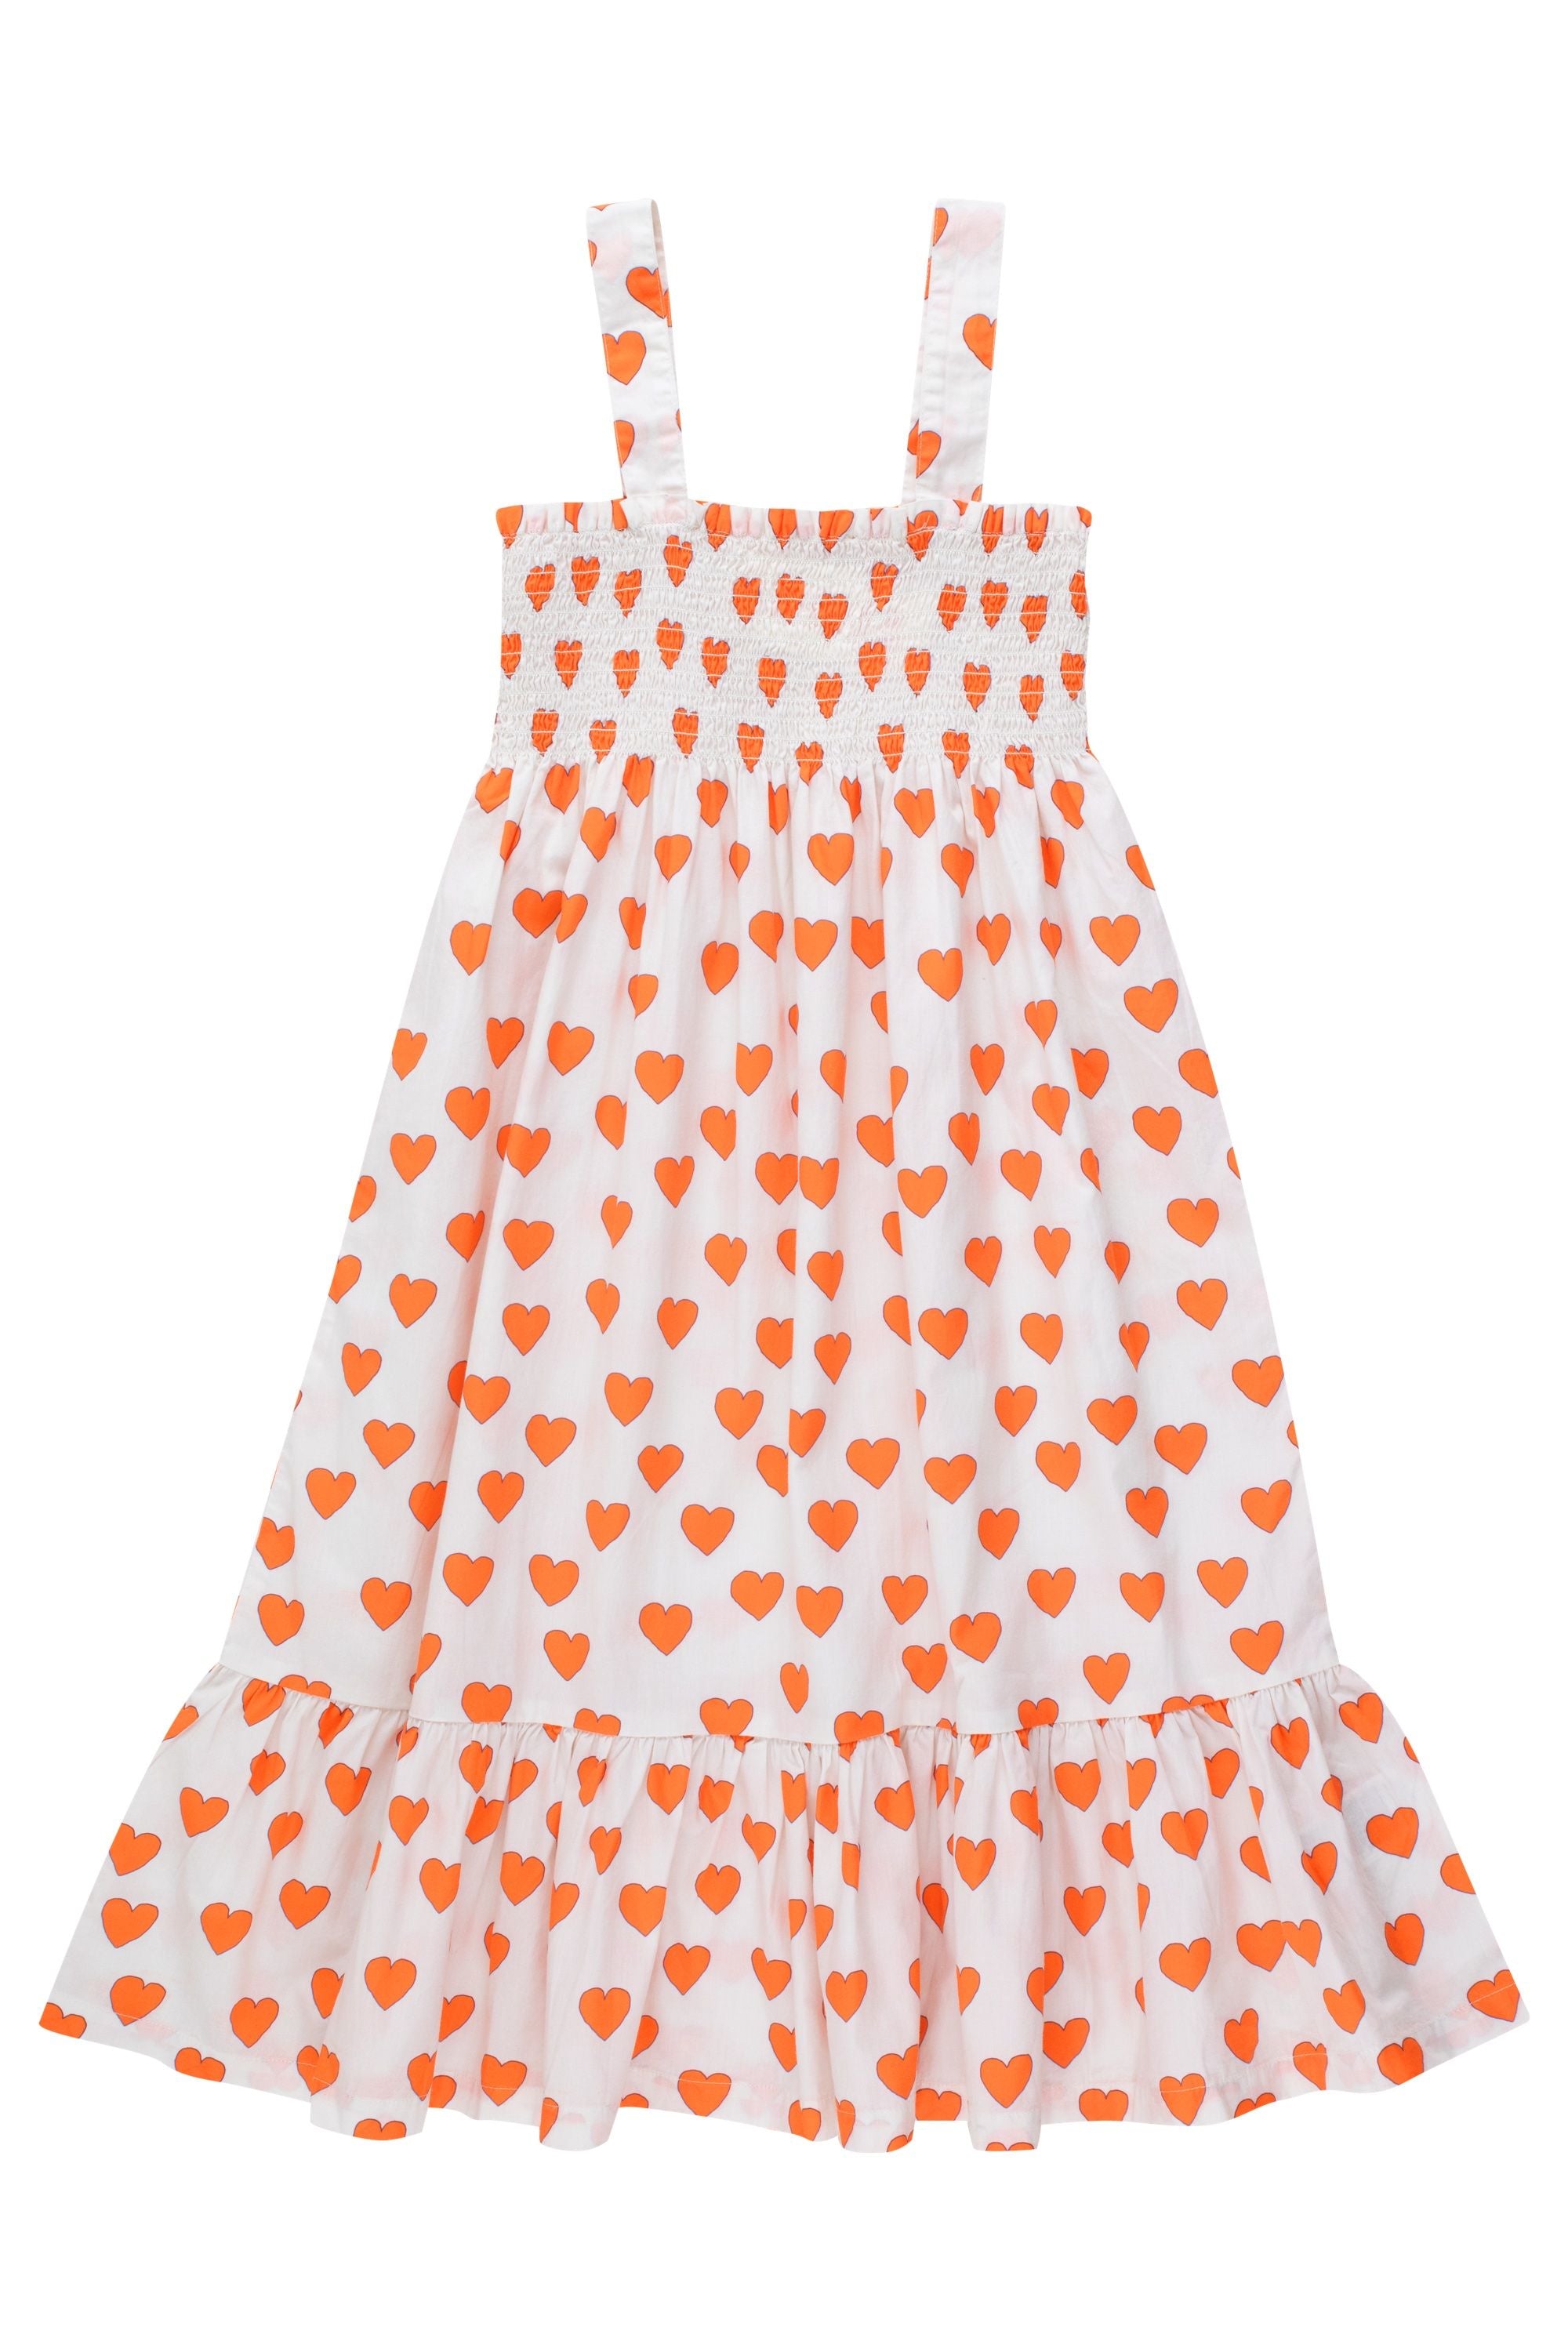 Tiny Cottons - Strappy Hearts Dress